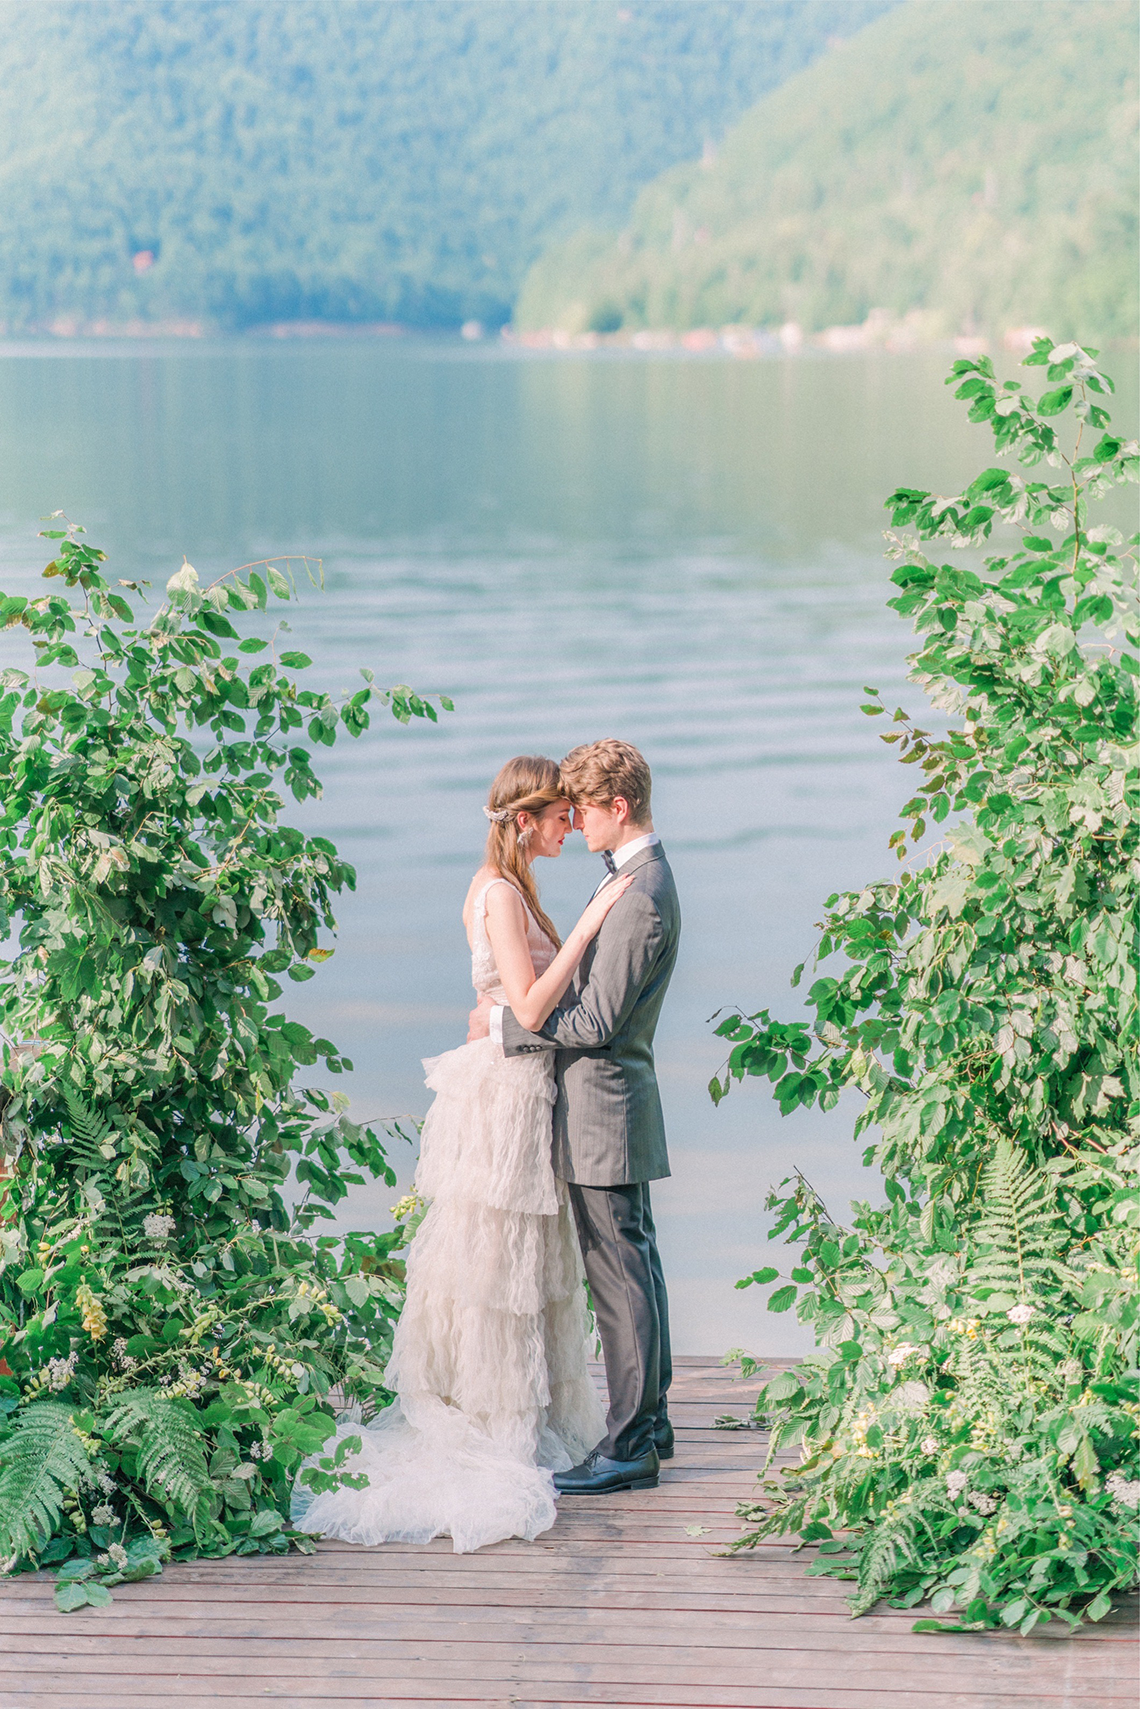 Beautiful and Ethereal Romanian Wedding Inspiration at Tarnita Lake – Ioana Porav Photography 28